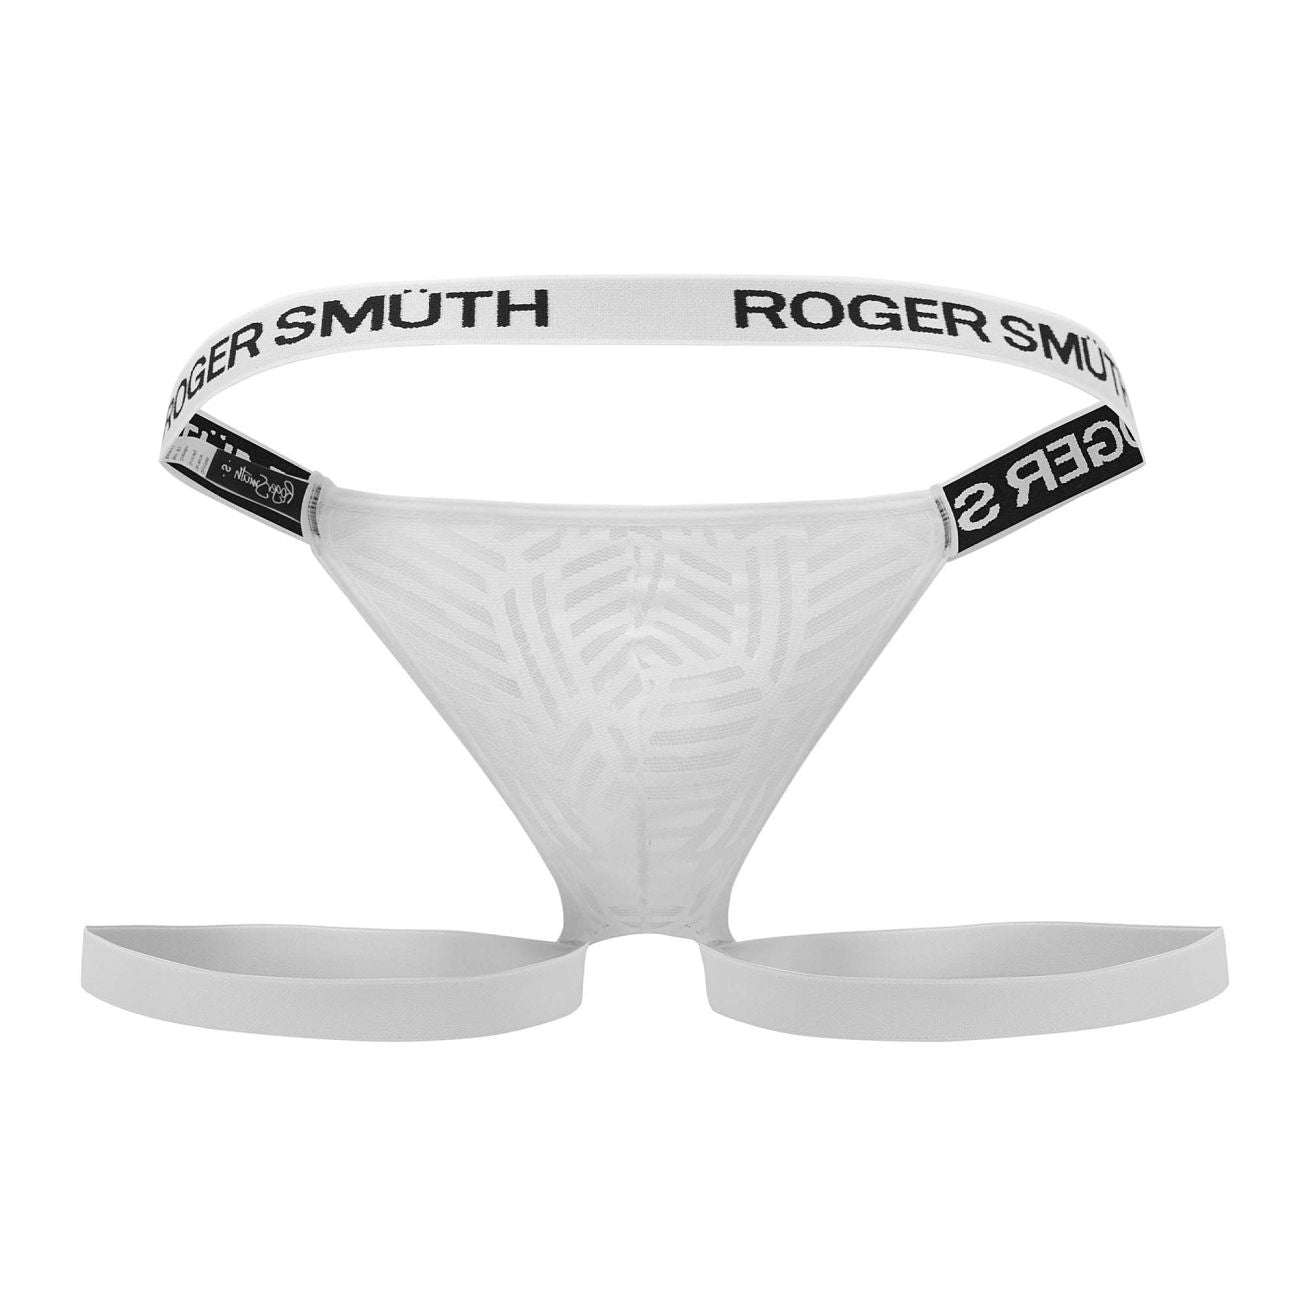 Roger Smuth RS071 Jockstrap